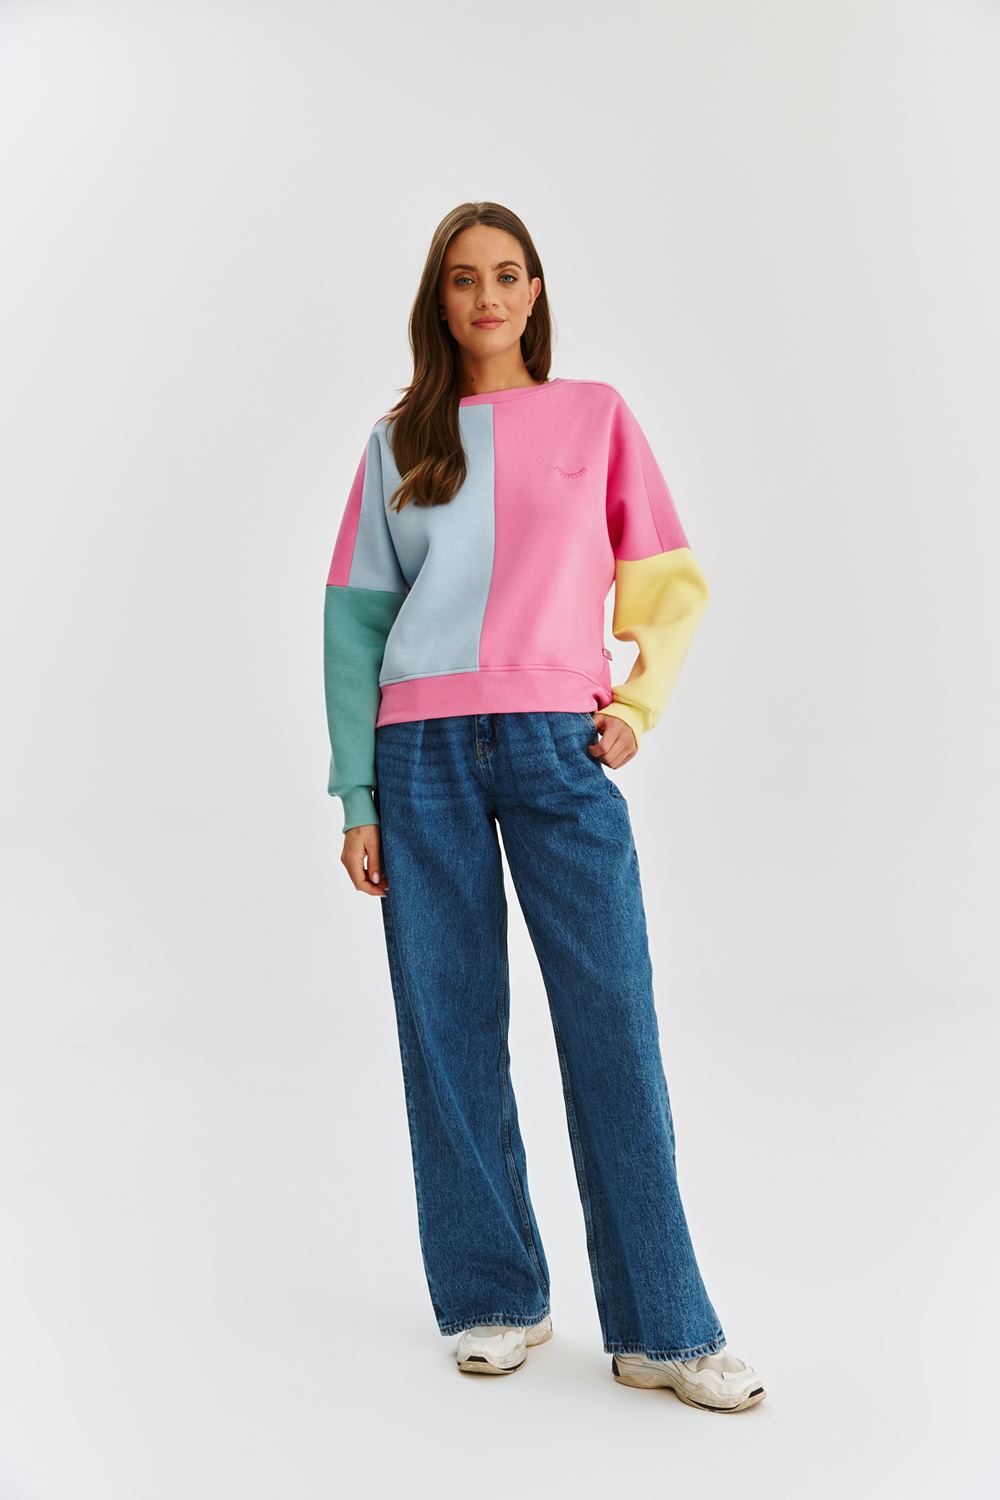 Colorful Candy sweatshirt